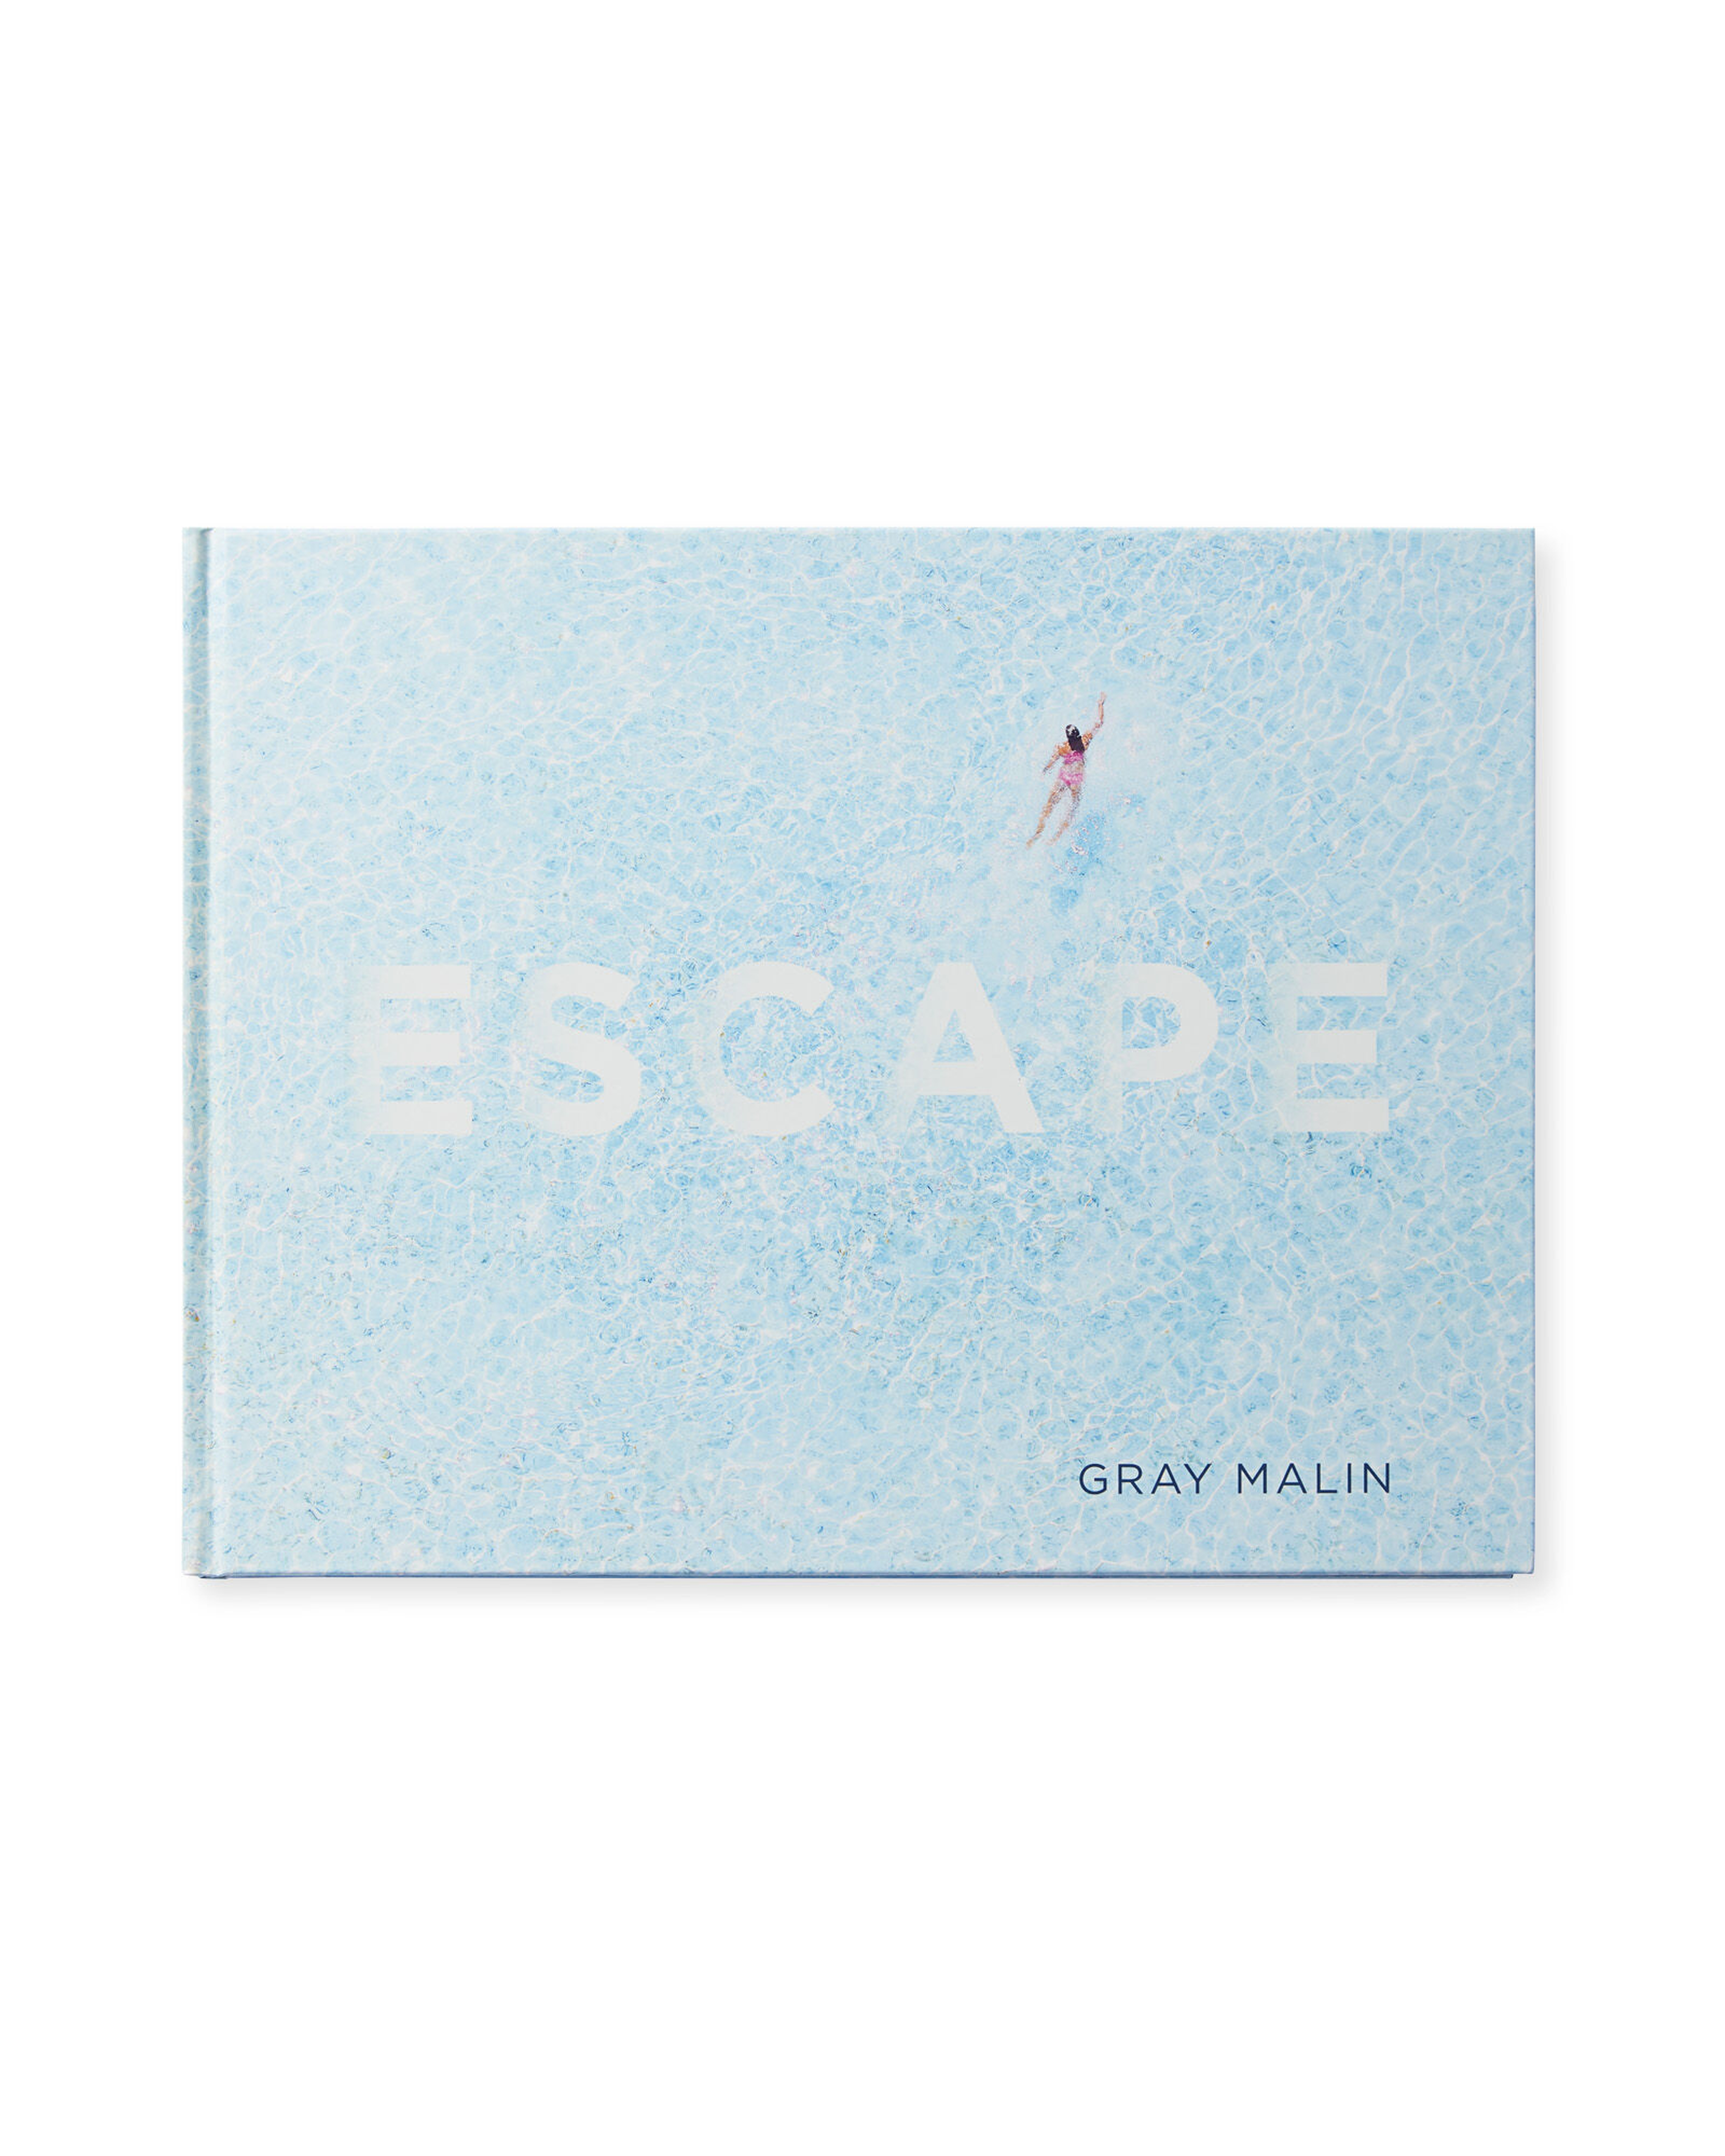 "Escape" by Gray Malin - Serena and Lily